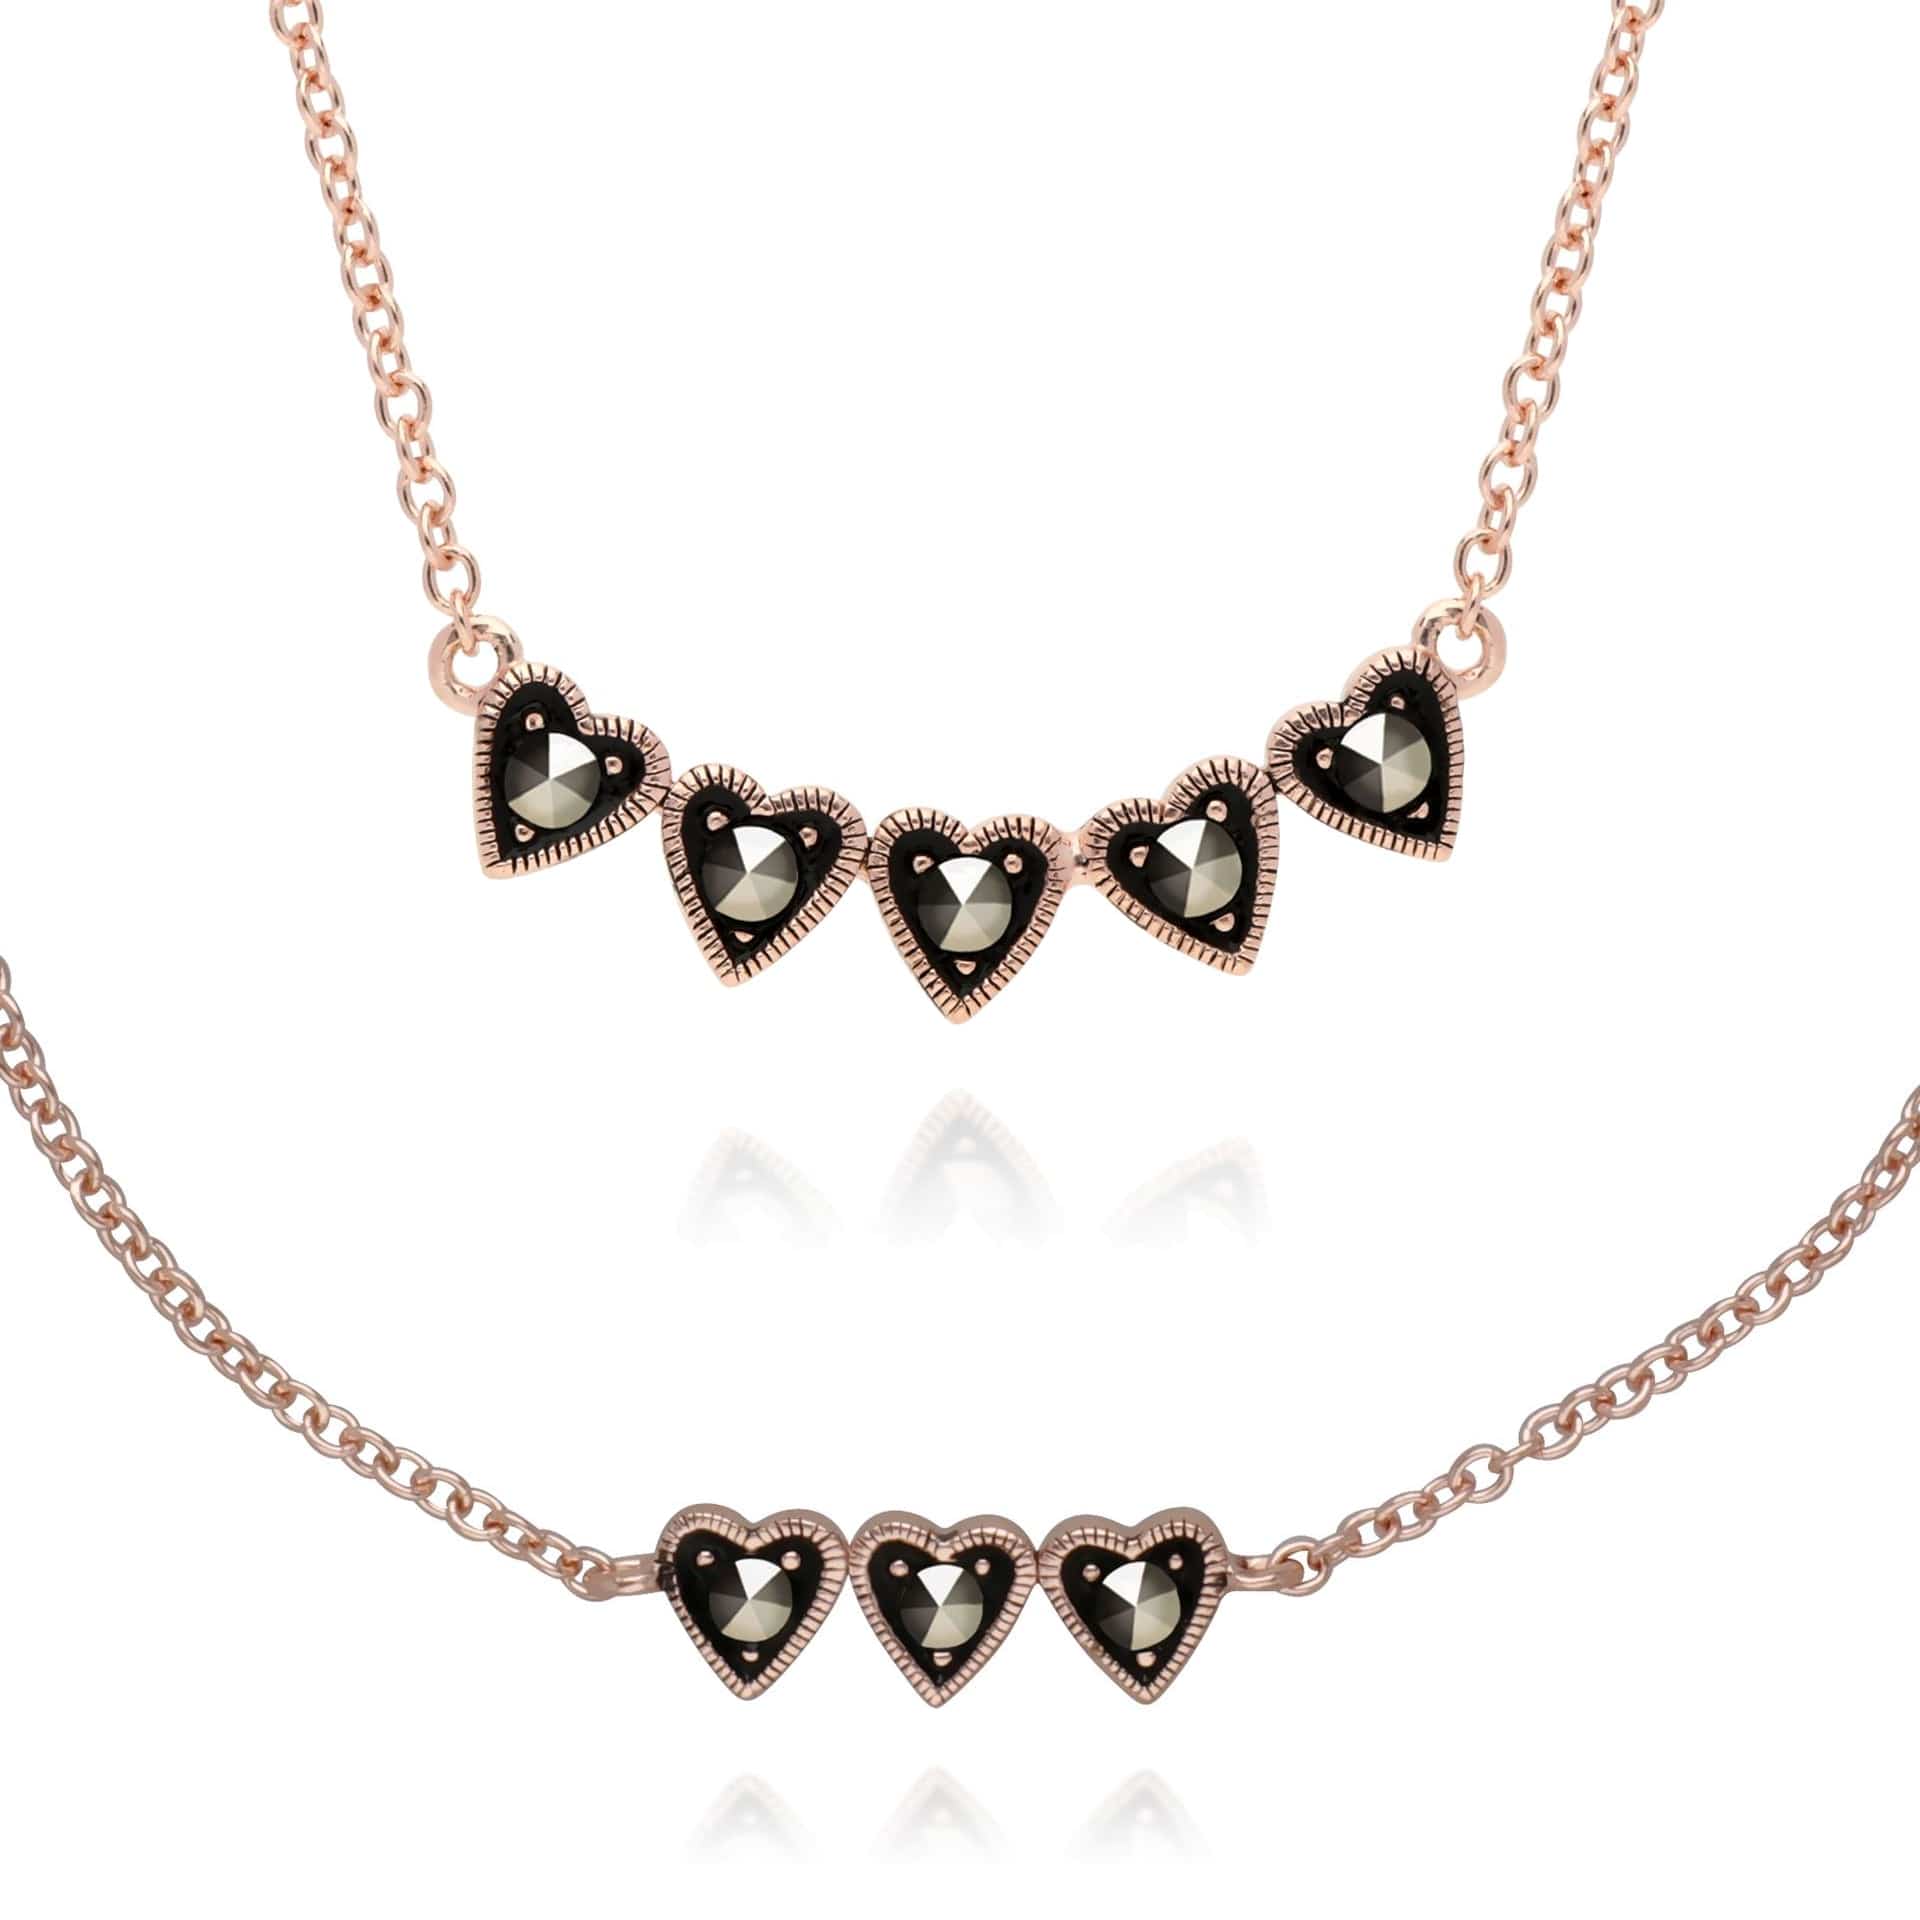 224N017601925-224L008101925 Rose Gold Plated Marcasite Heart Bracelet & Necklace Set in 925 Sterling Silver 1